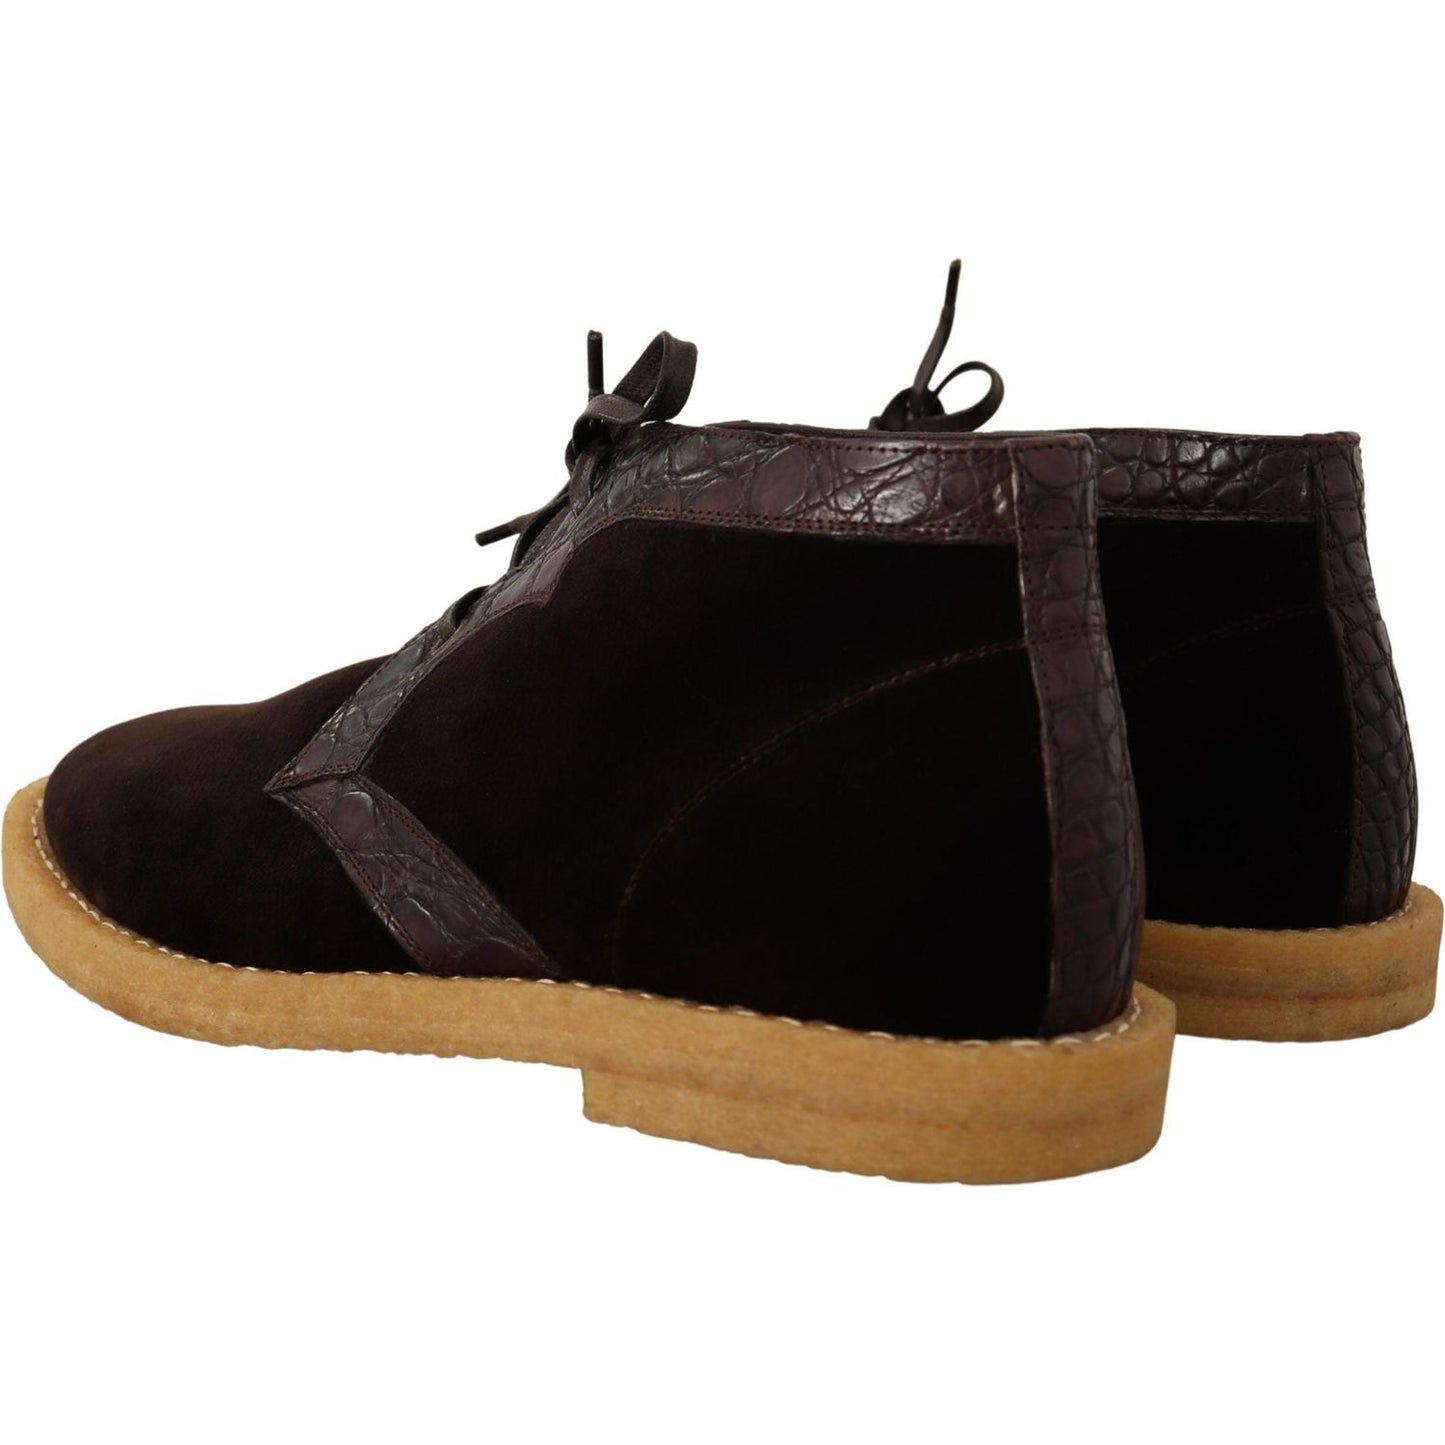 Dolce & Gabbana Exotic Caiman Leather Ankle Boots in Brown brown-velvet-exotic-leather-boots IMG_9452-scaled-13ad6311-e4e.jpg